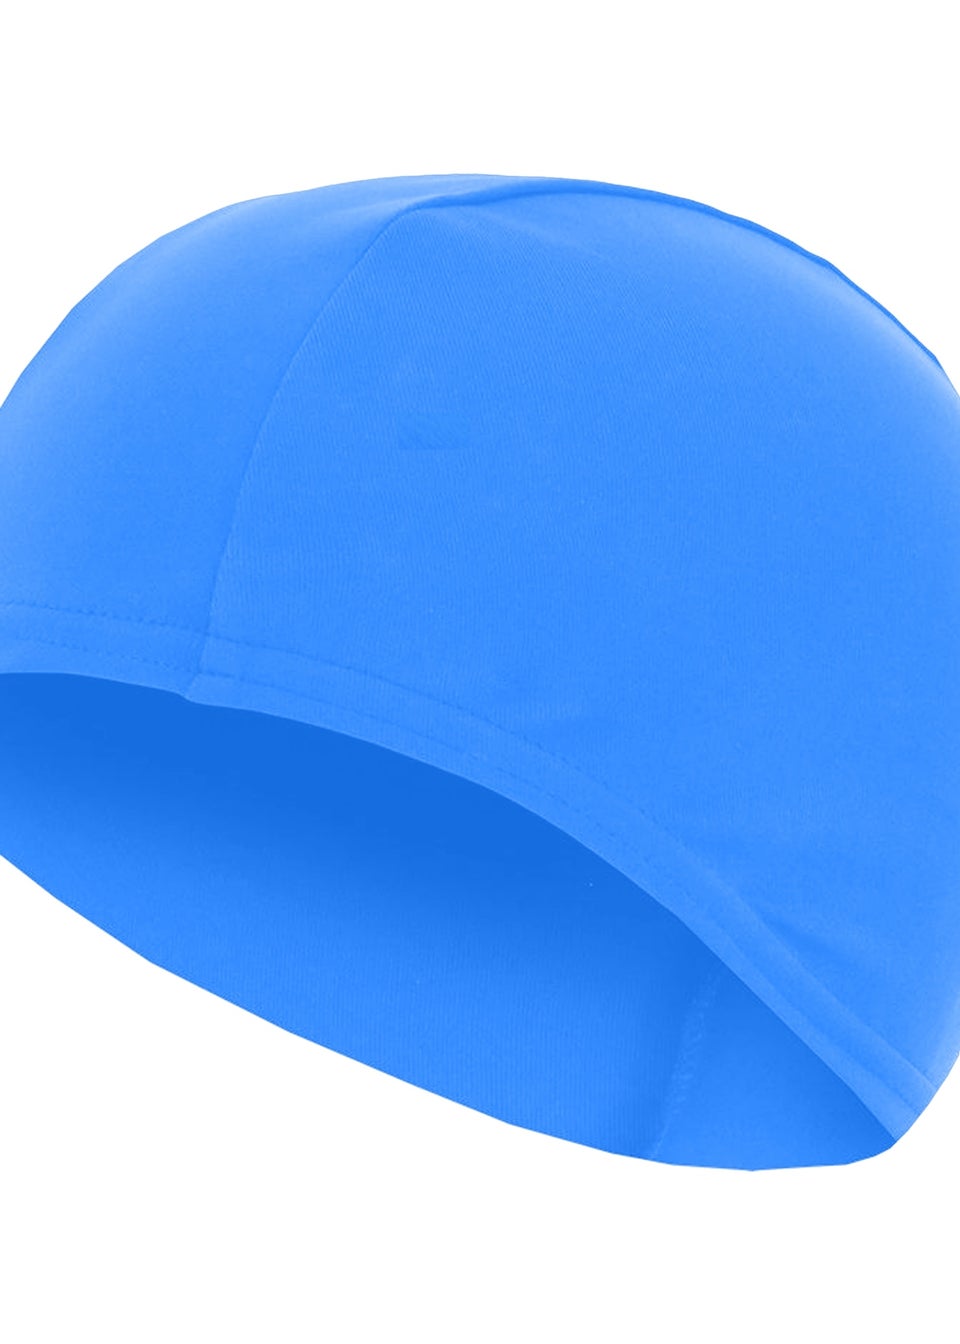 Speedo Kids Blue Polyester Swim Cap